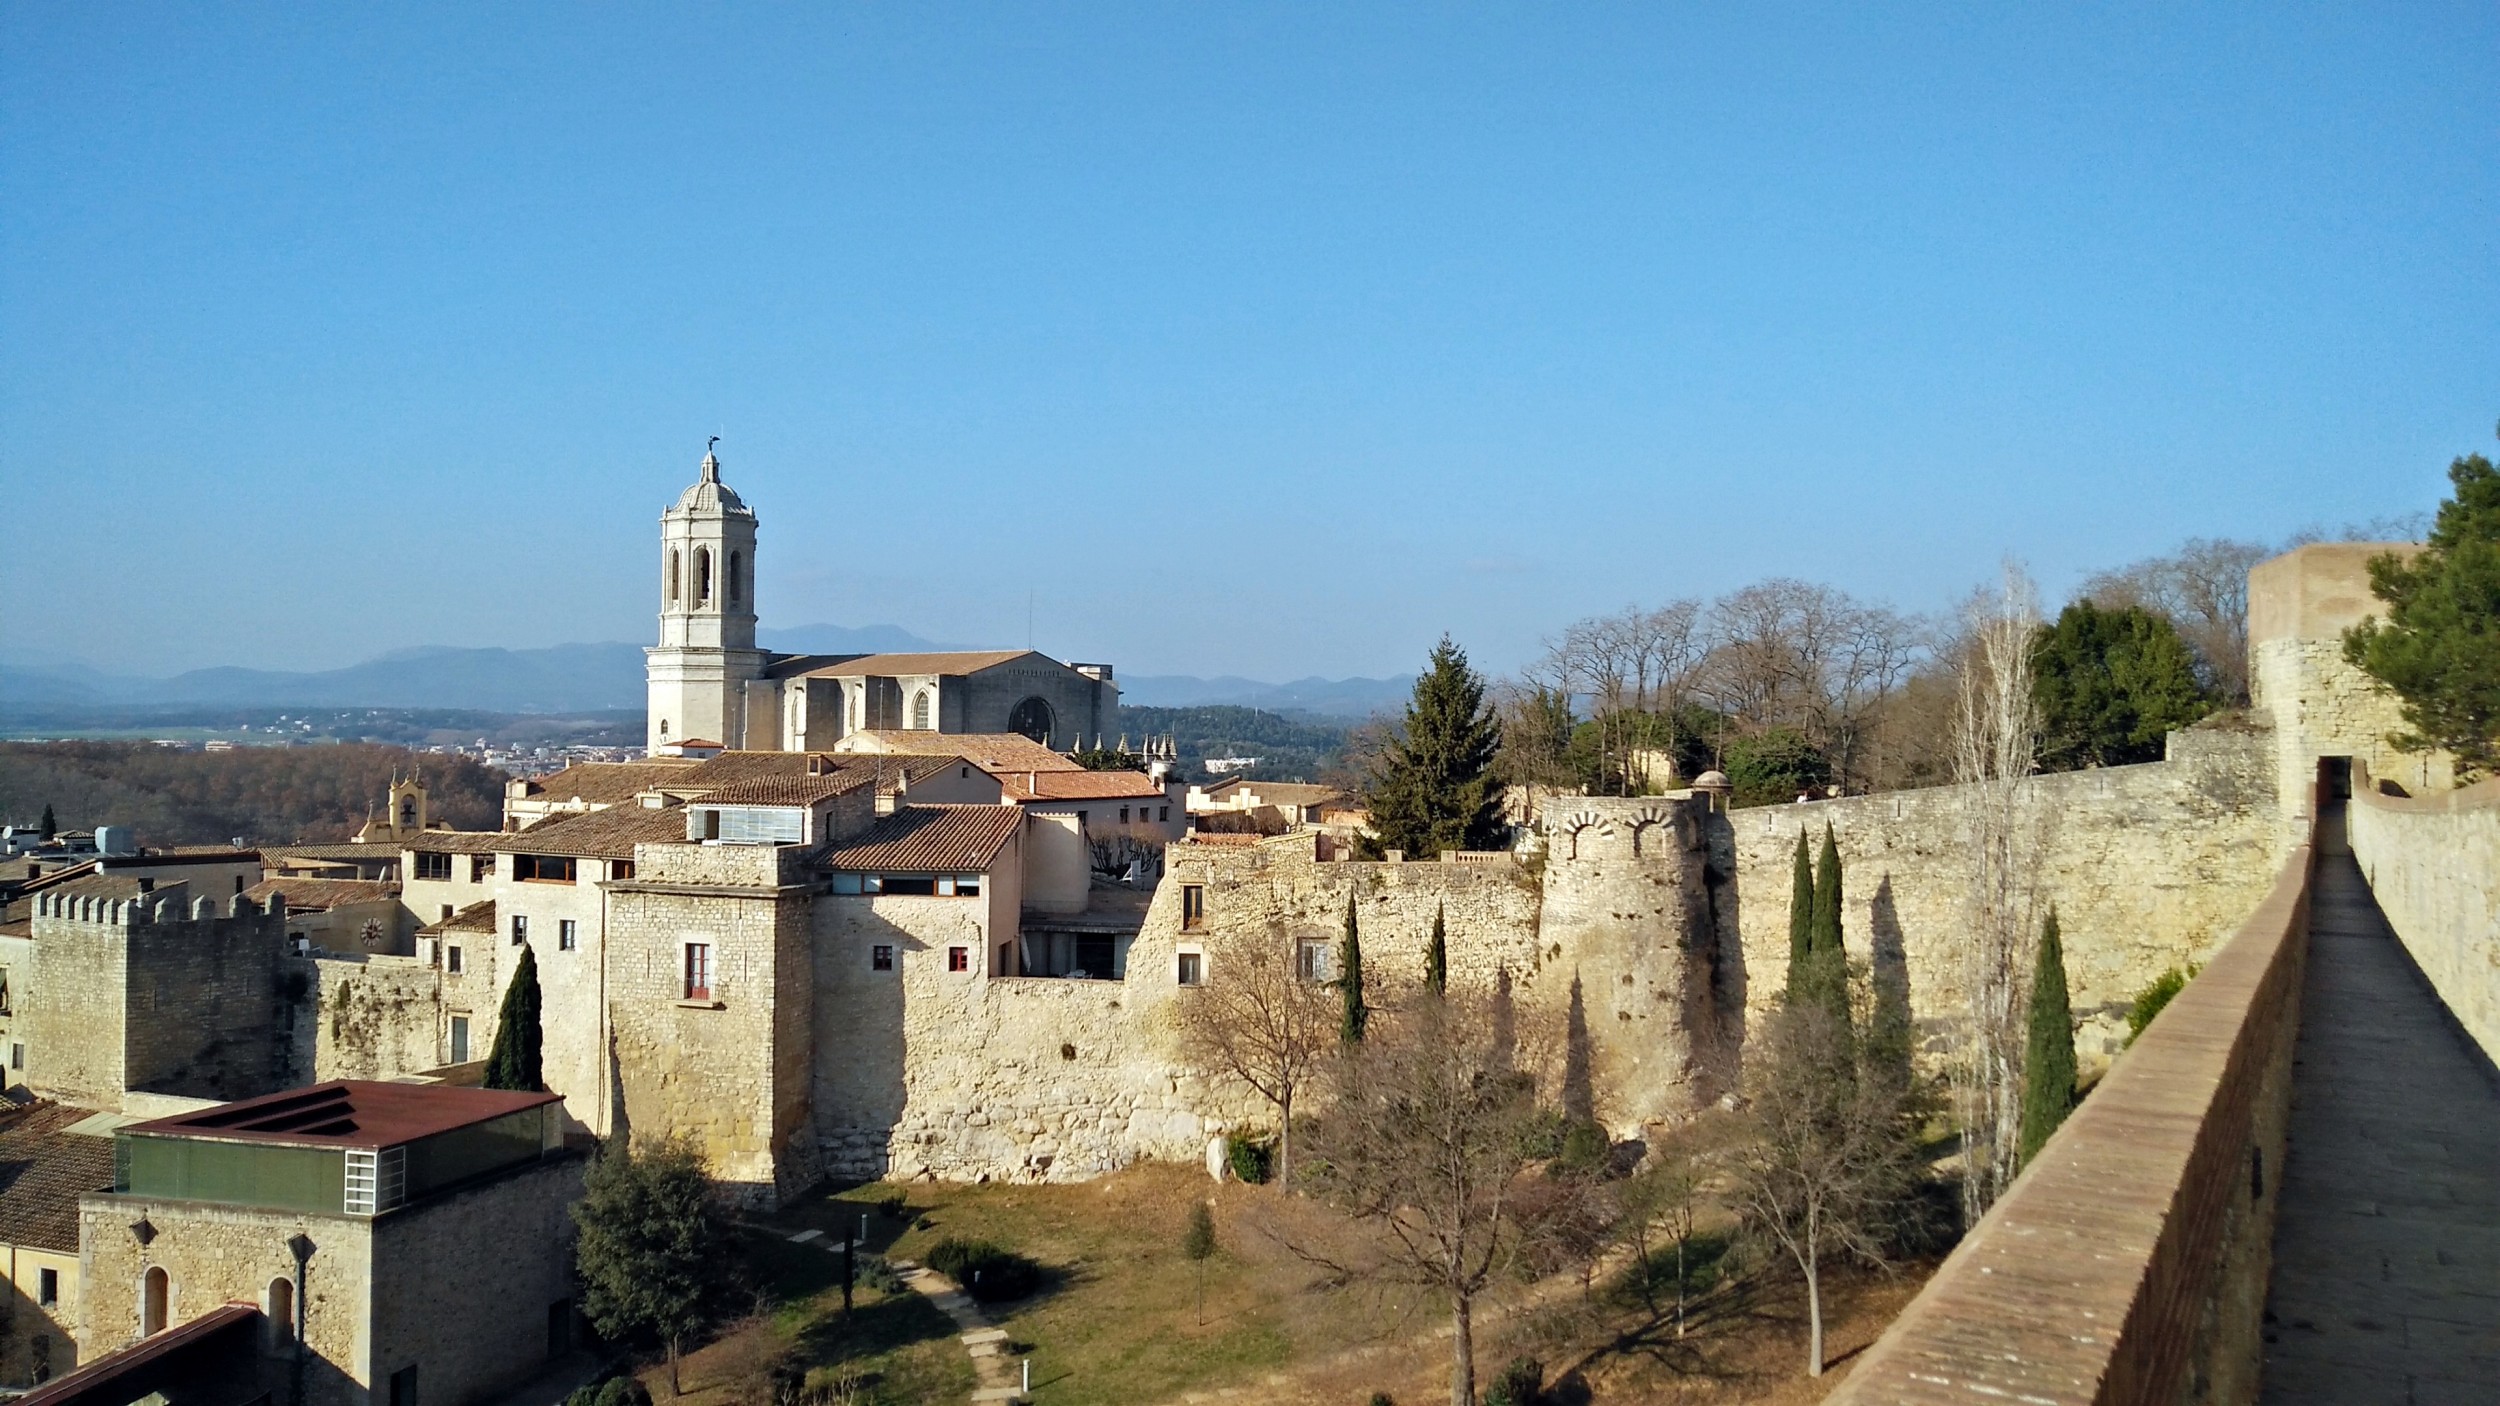 University of Girona wall walk: Spain | Visions of Travel